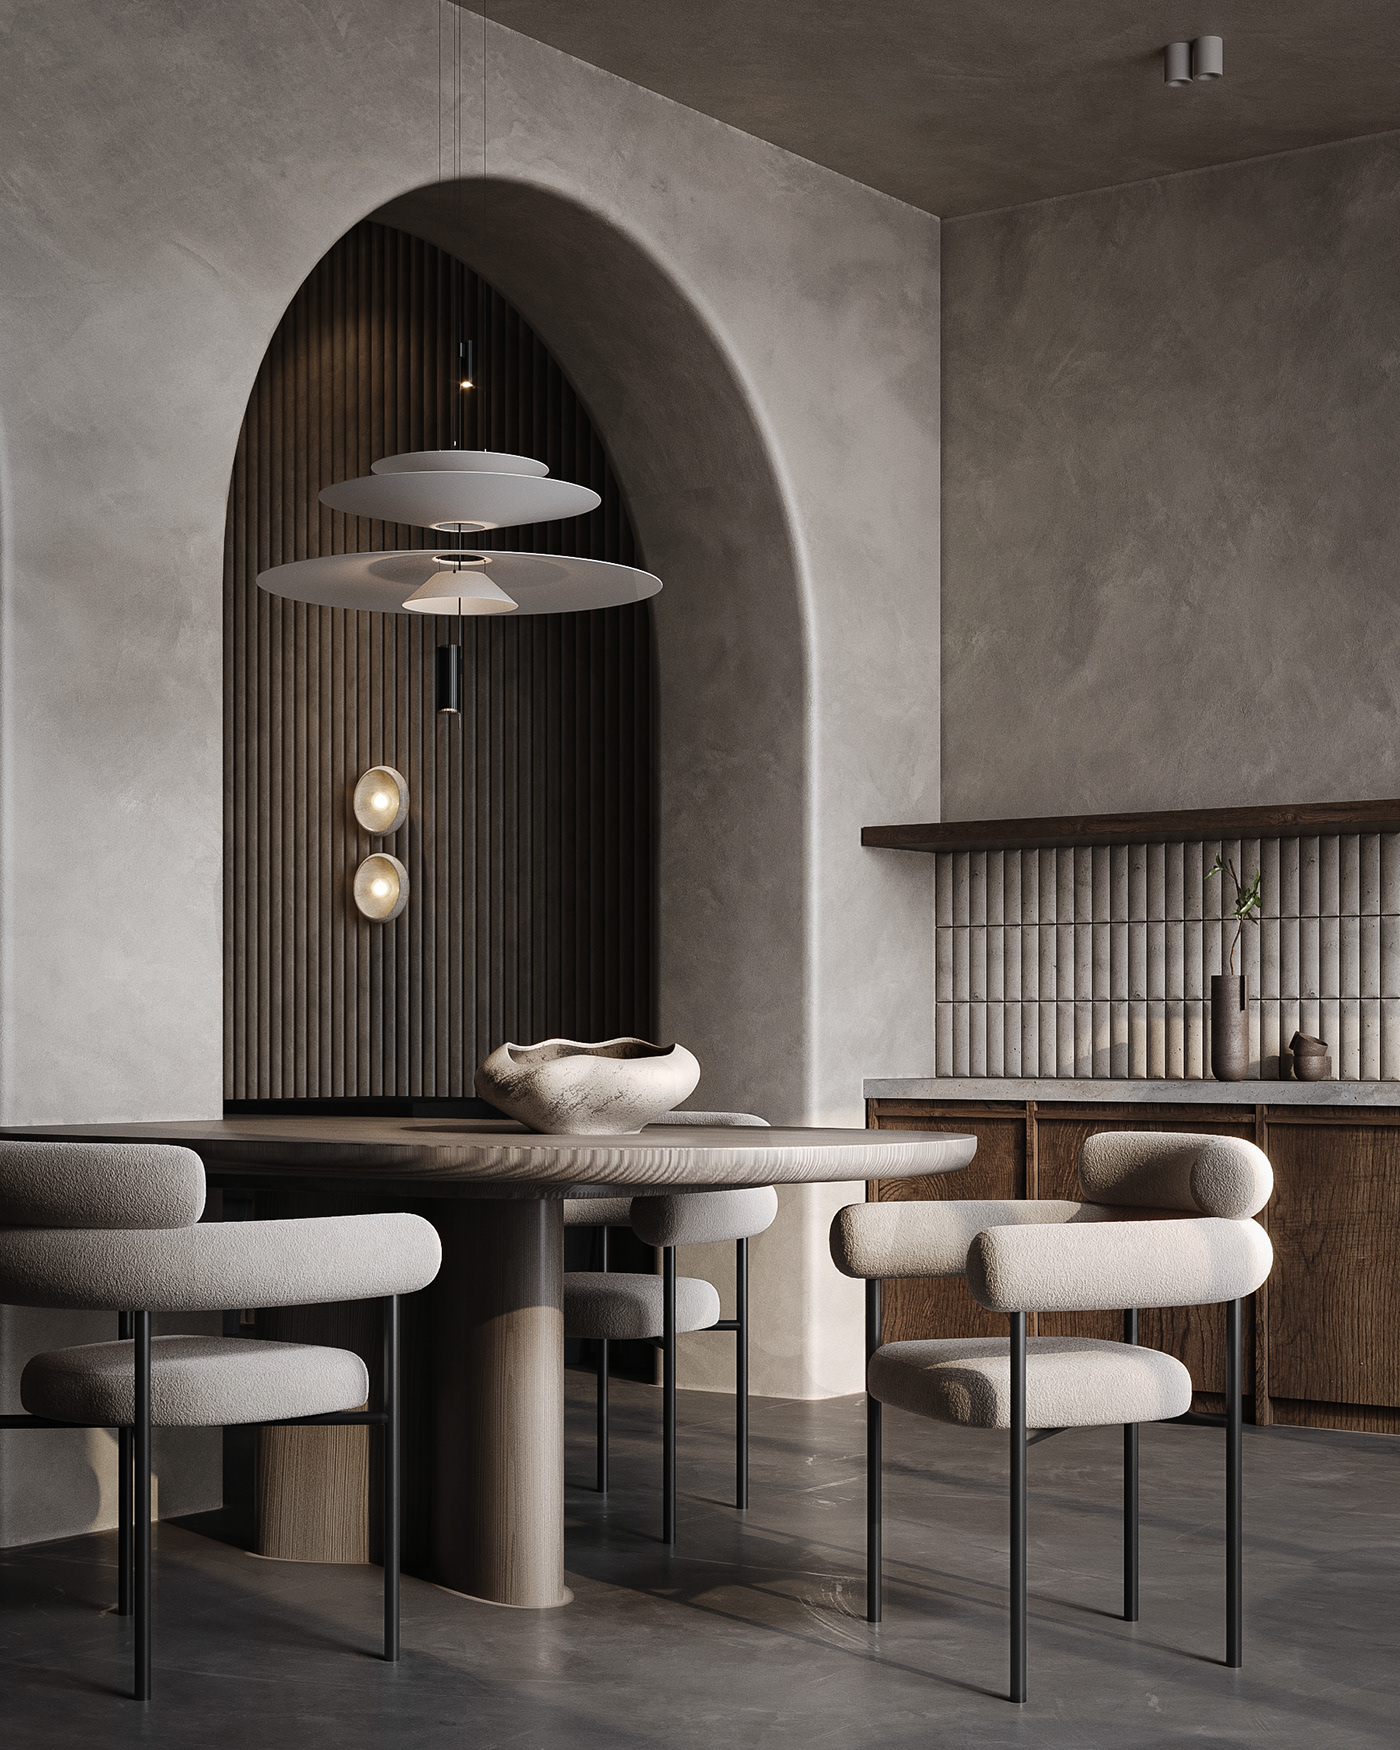 3D 3ds max archviz cafe CG design interior design  Render restaurant Vizualization